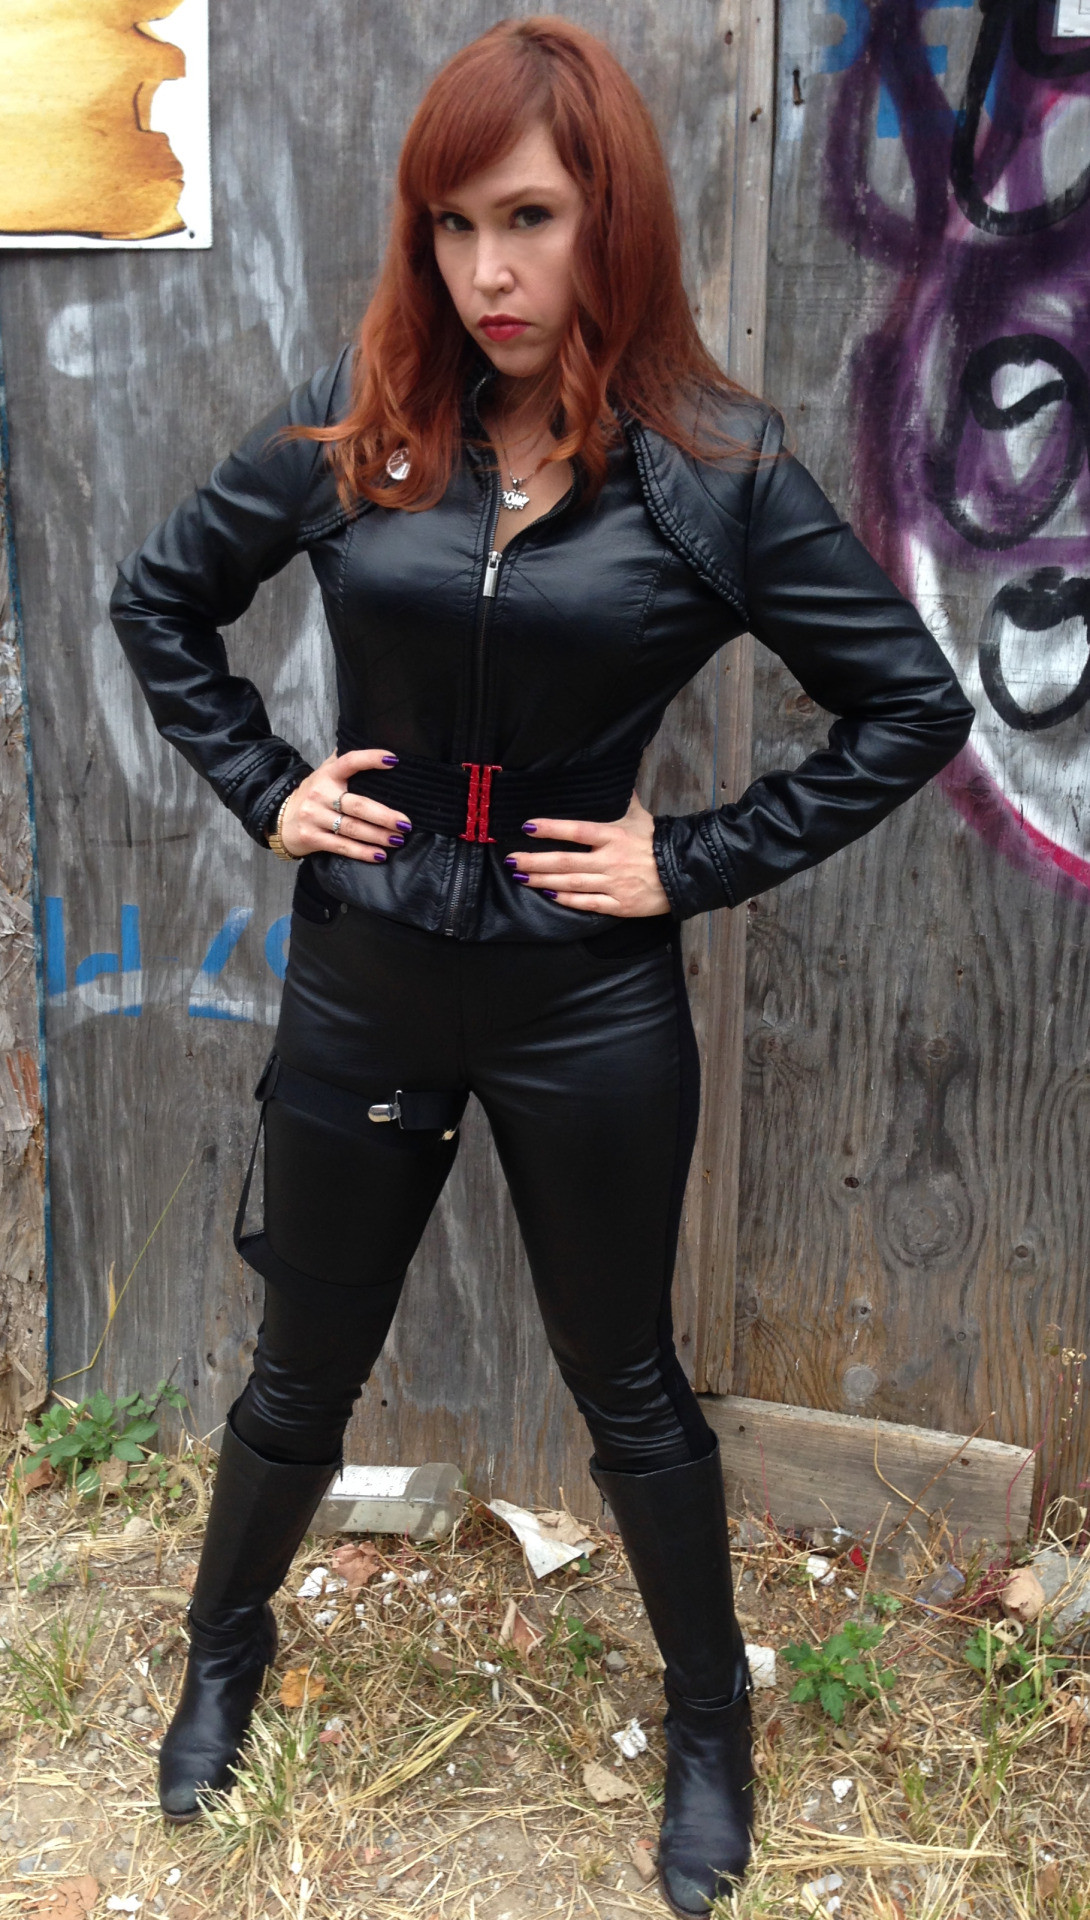 Black Widow Costume DIY
 Lorraine Cink DIY Black Widow Halloween Costume It’s a